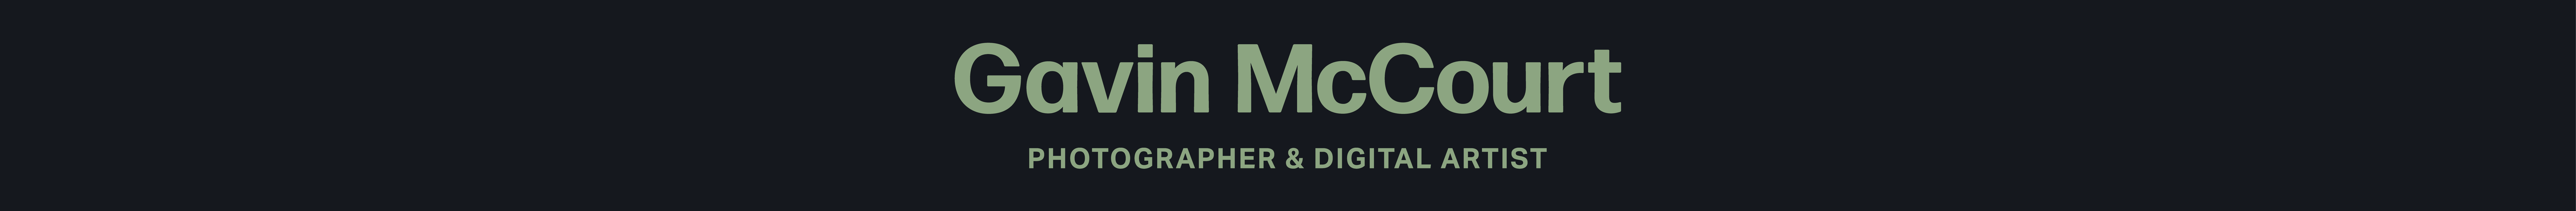 Gavin McCourt's profile banner